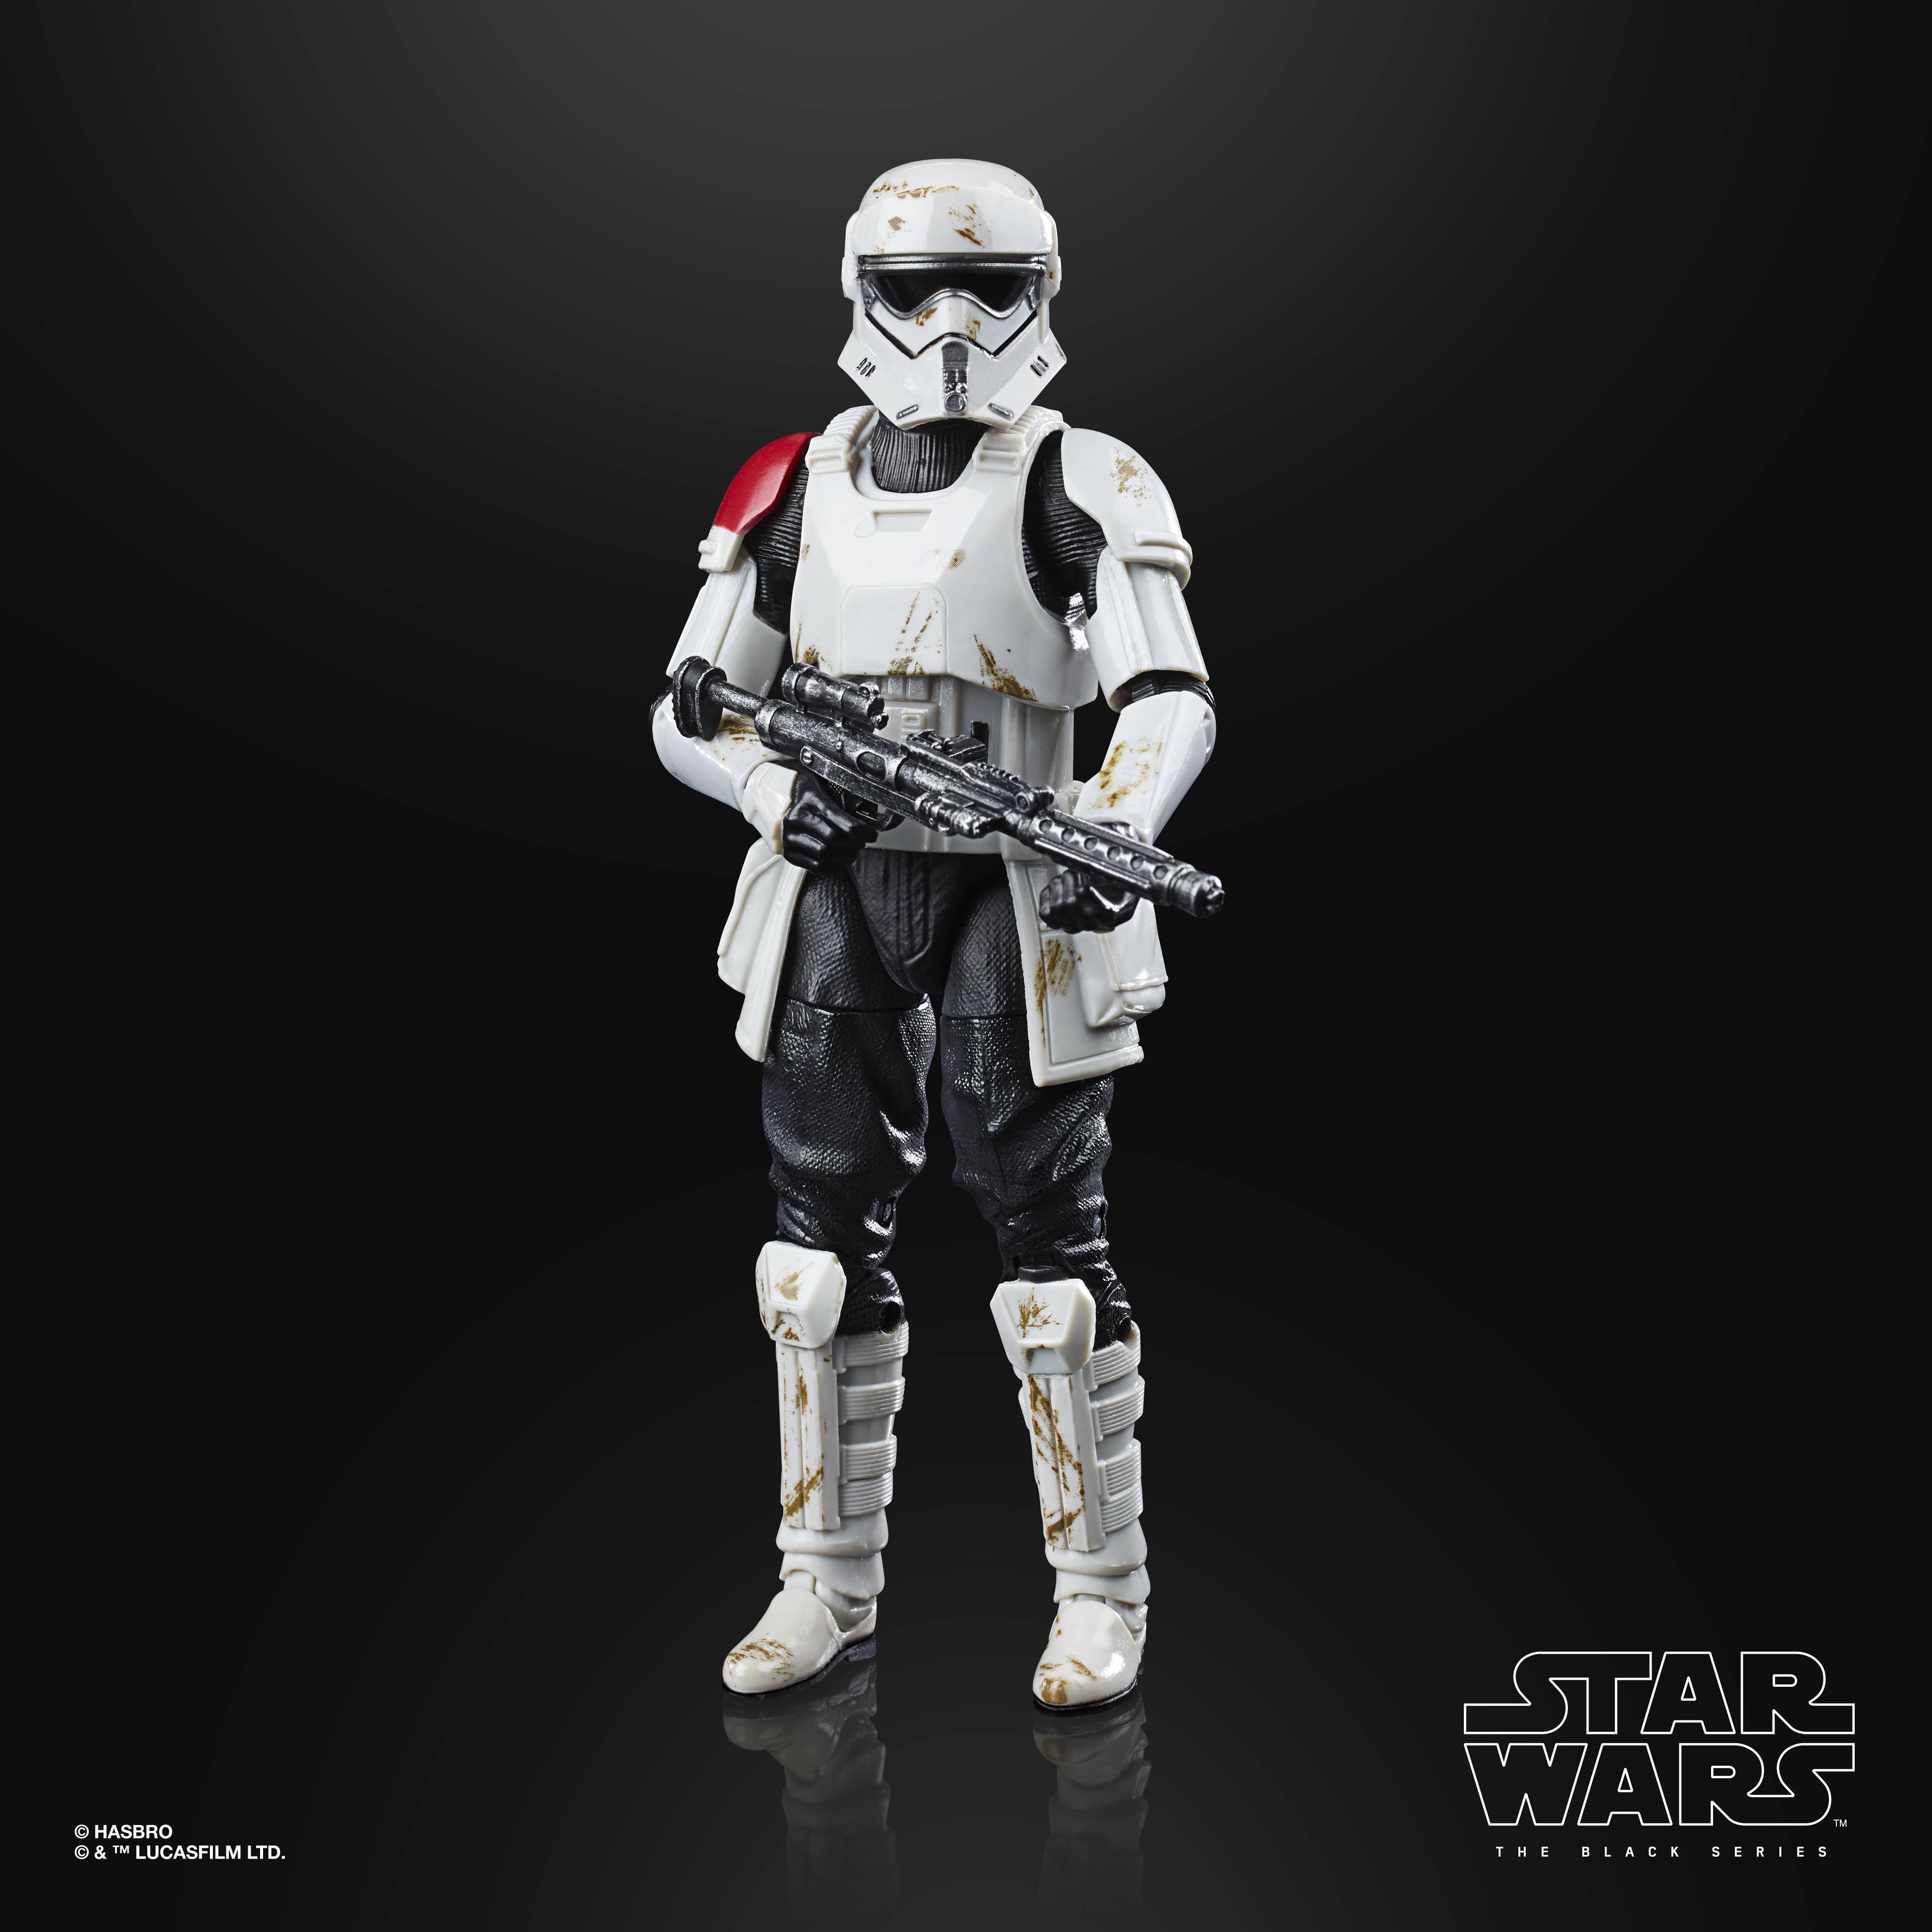 Star Wars Galaxy's Edge Black Series Actionfigur 2020 Mountain Trooper E96265L00 5010993750276